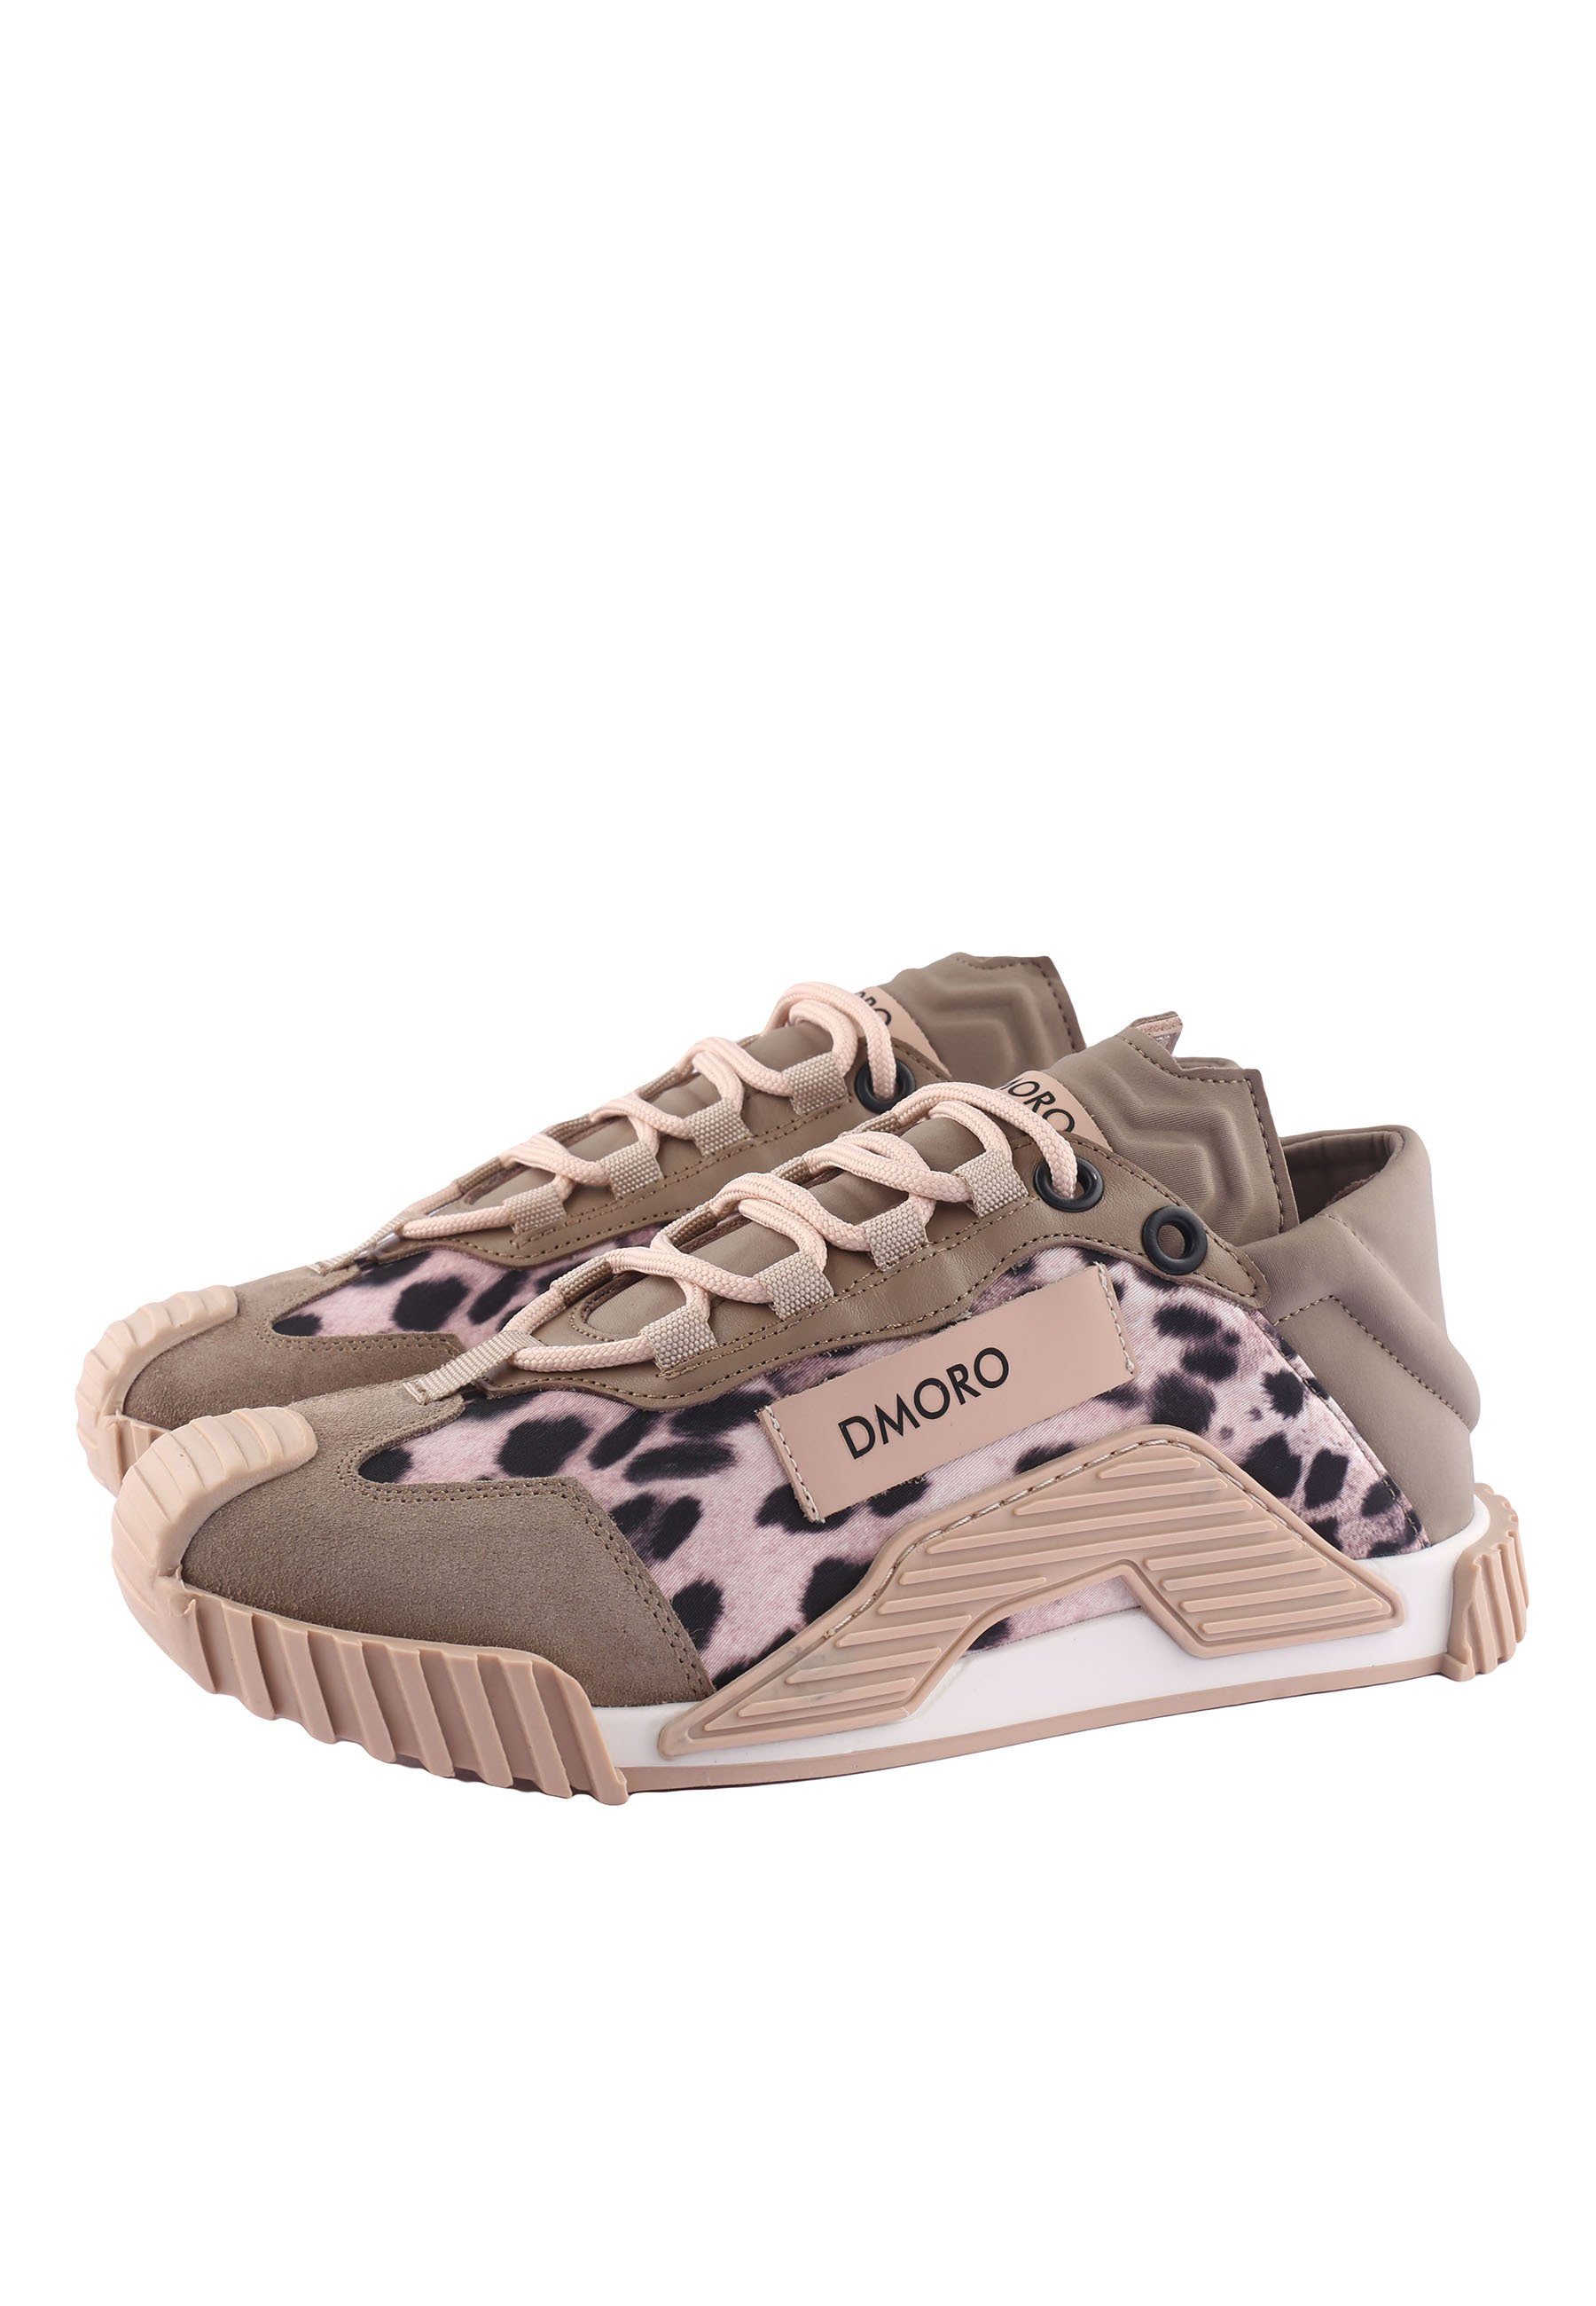 D.MoRo Shoes »Golhine« Sneaker online kaufen | OTTO